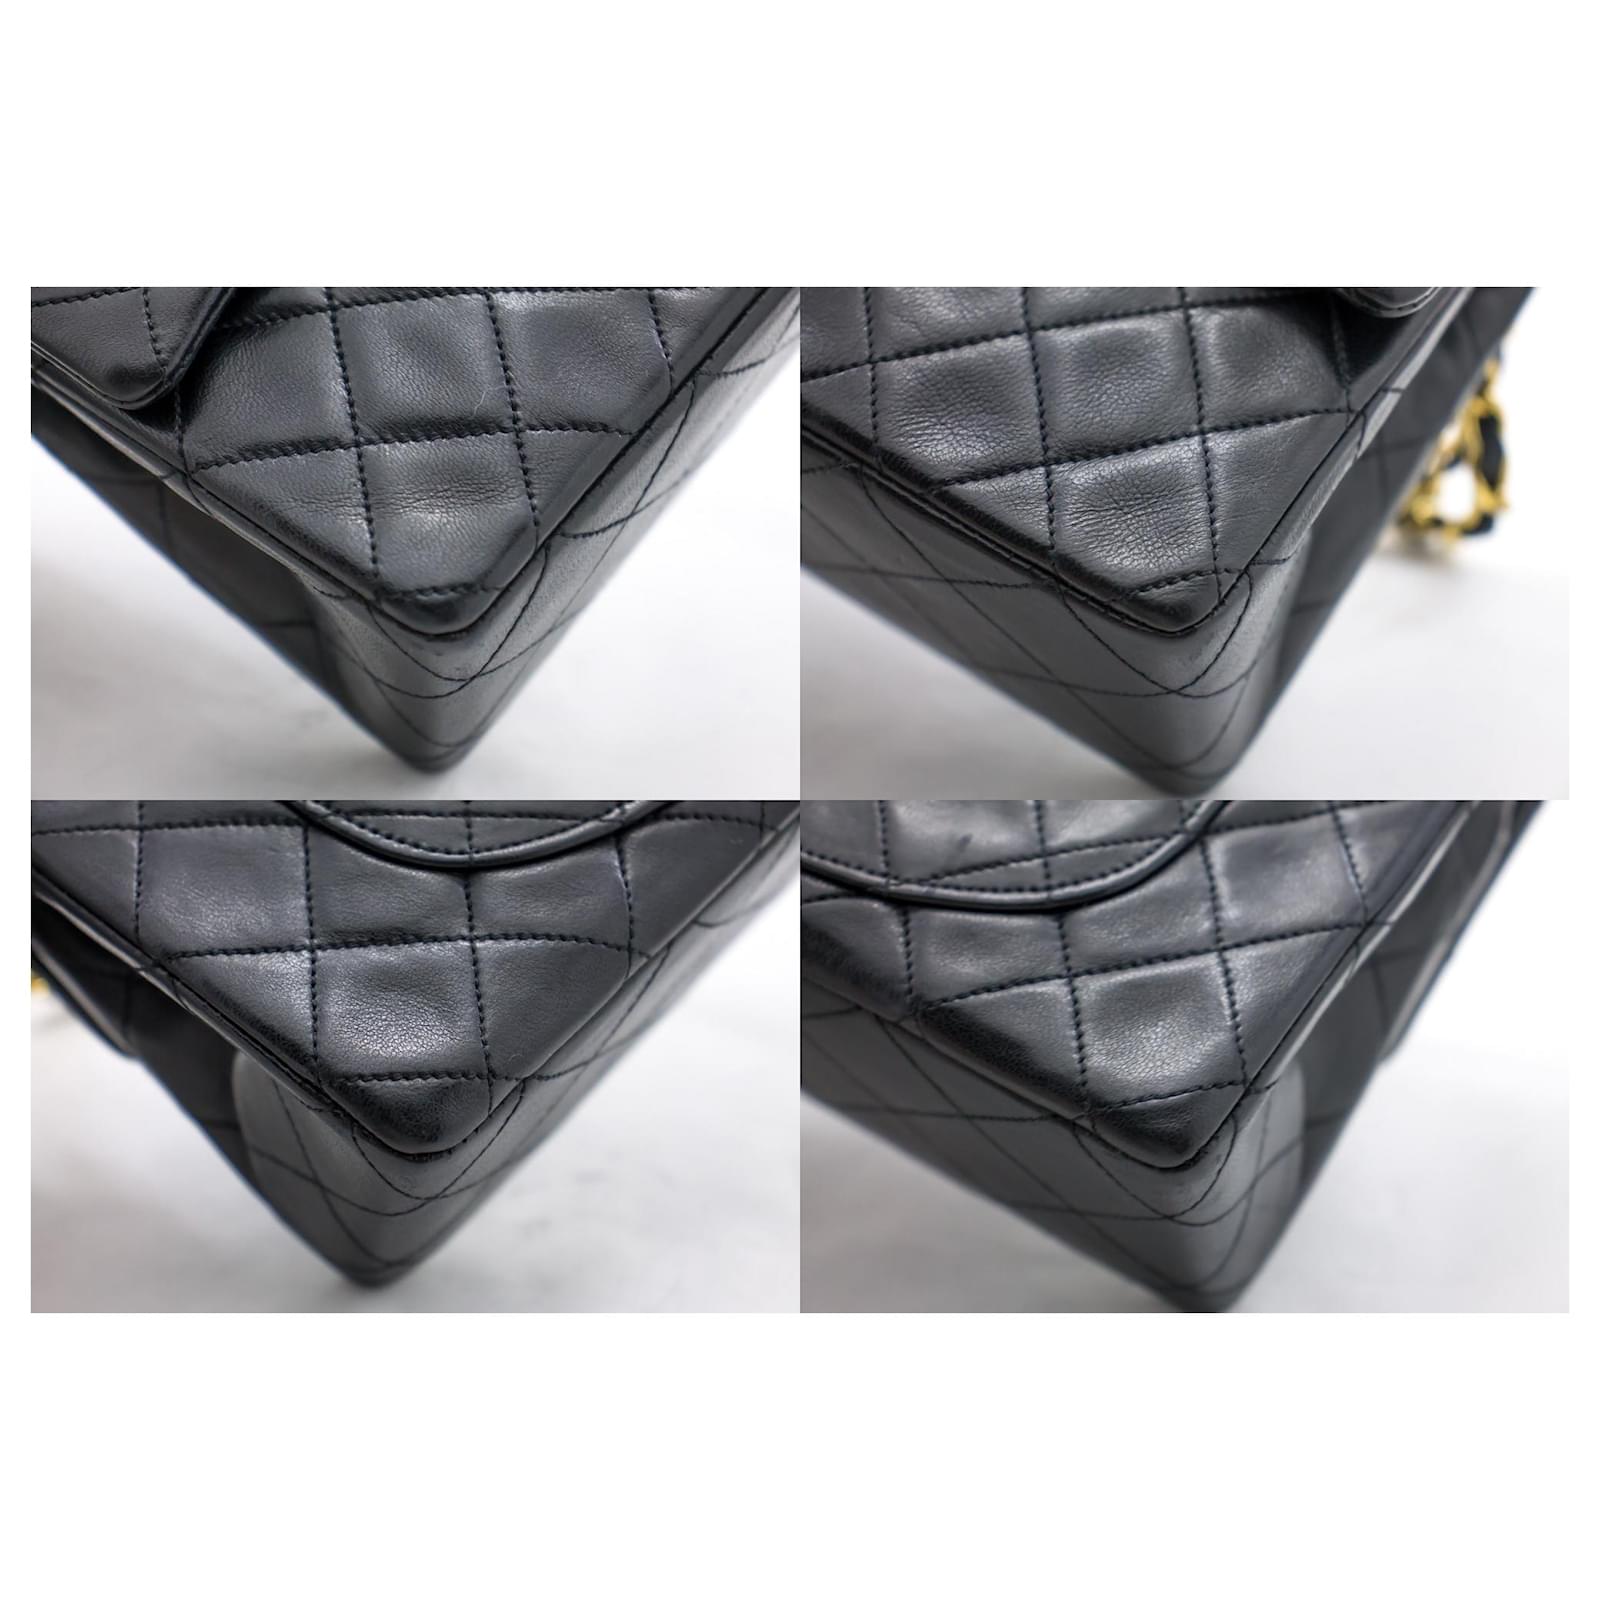 Handbags Chanel Chanel Jumbo Caviar 11 Large Chain Shoulder Bag Flap Black Quilt